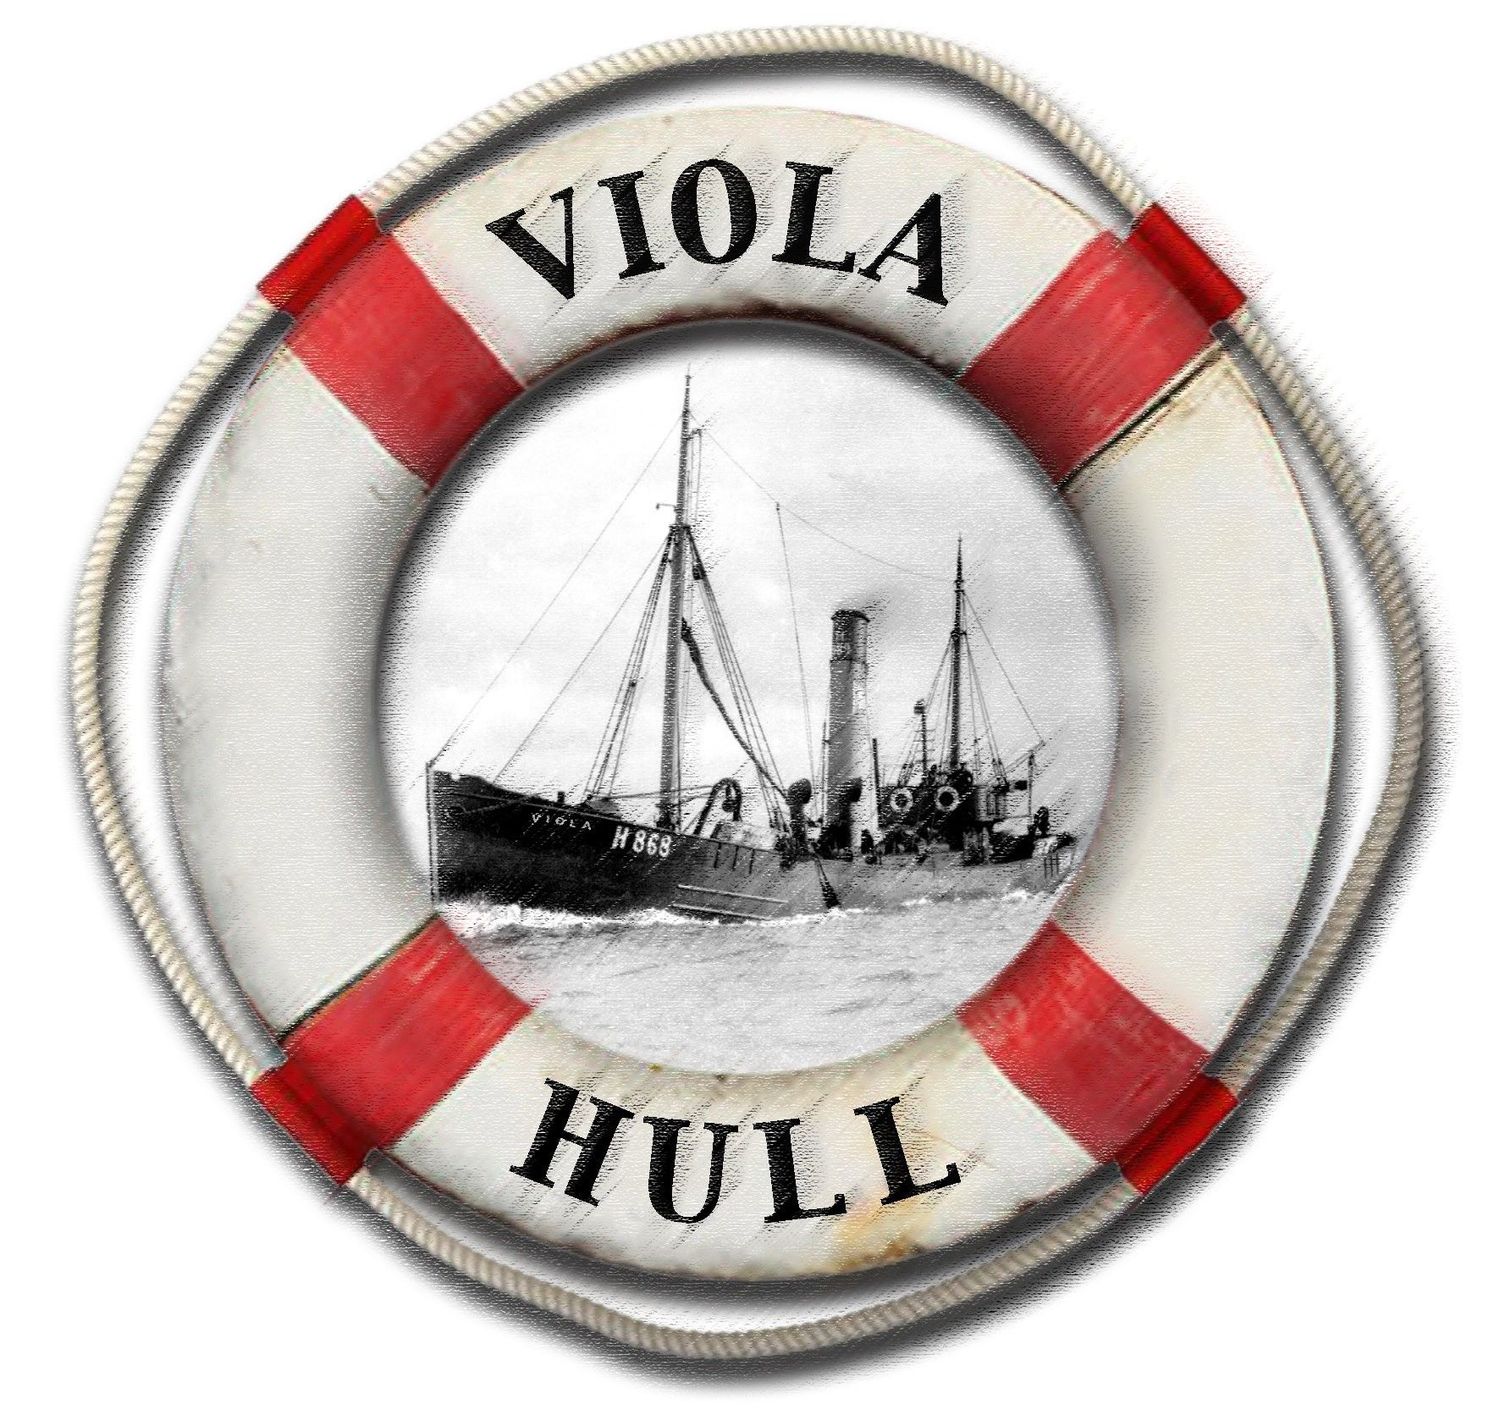 Viola Trust logo